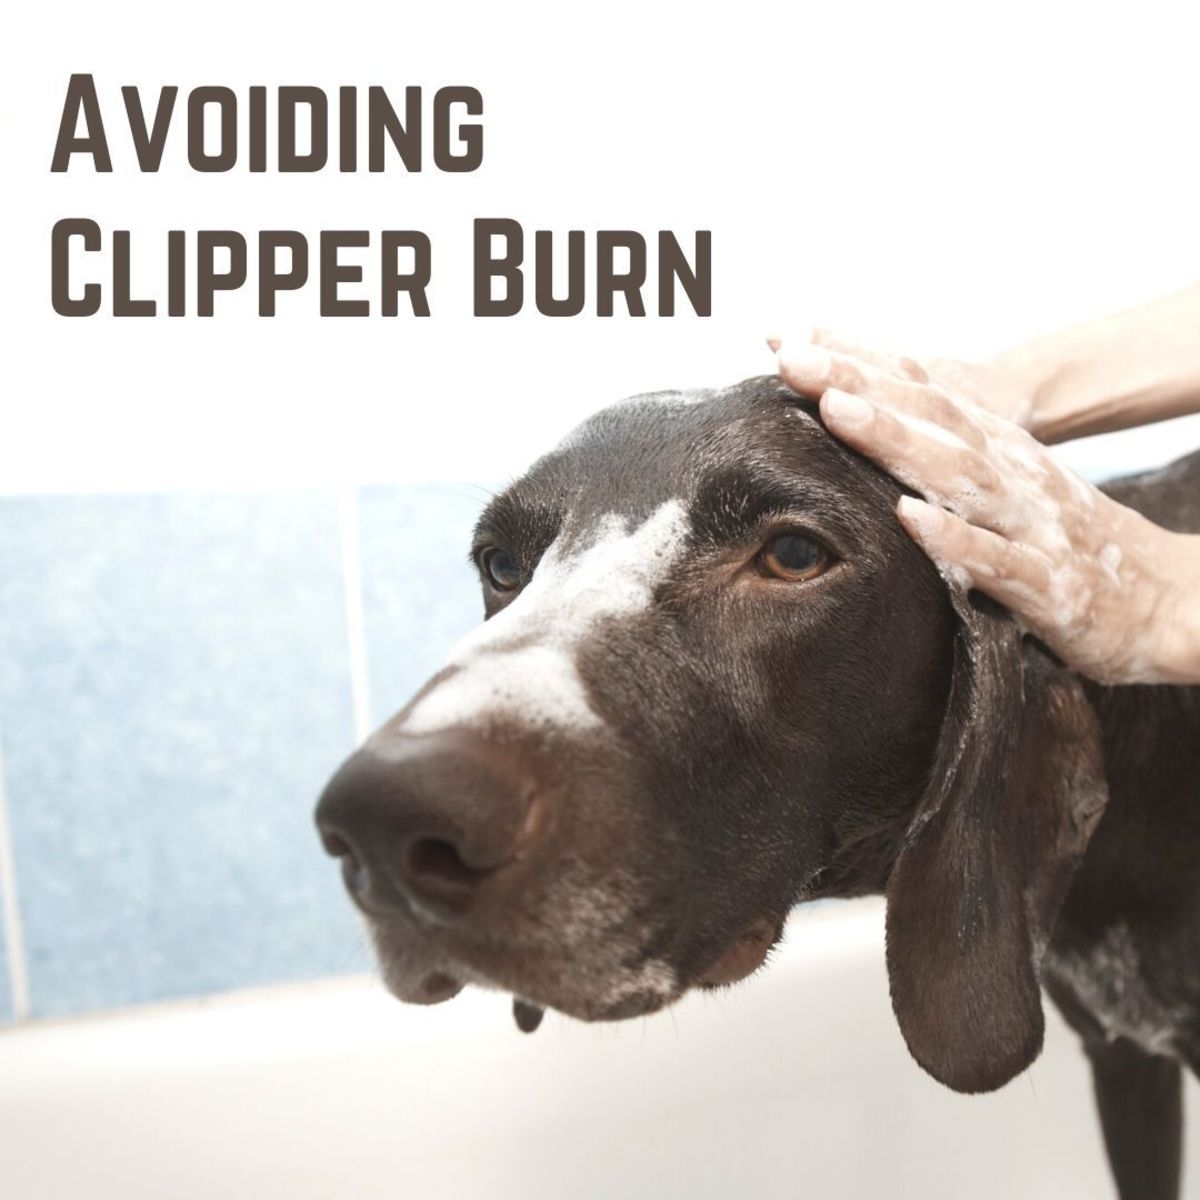 Can dogs get razor burn?